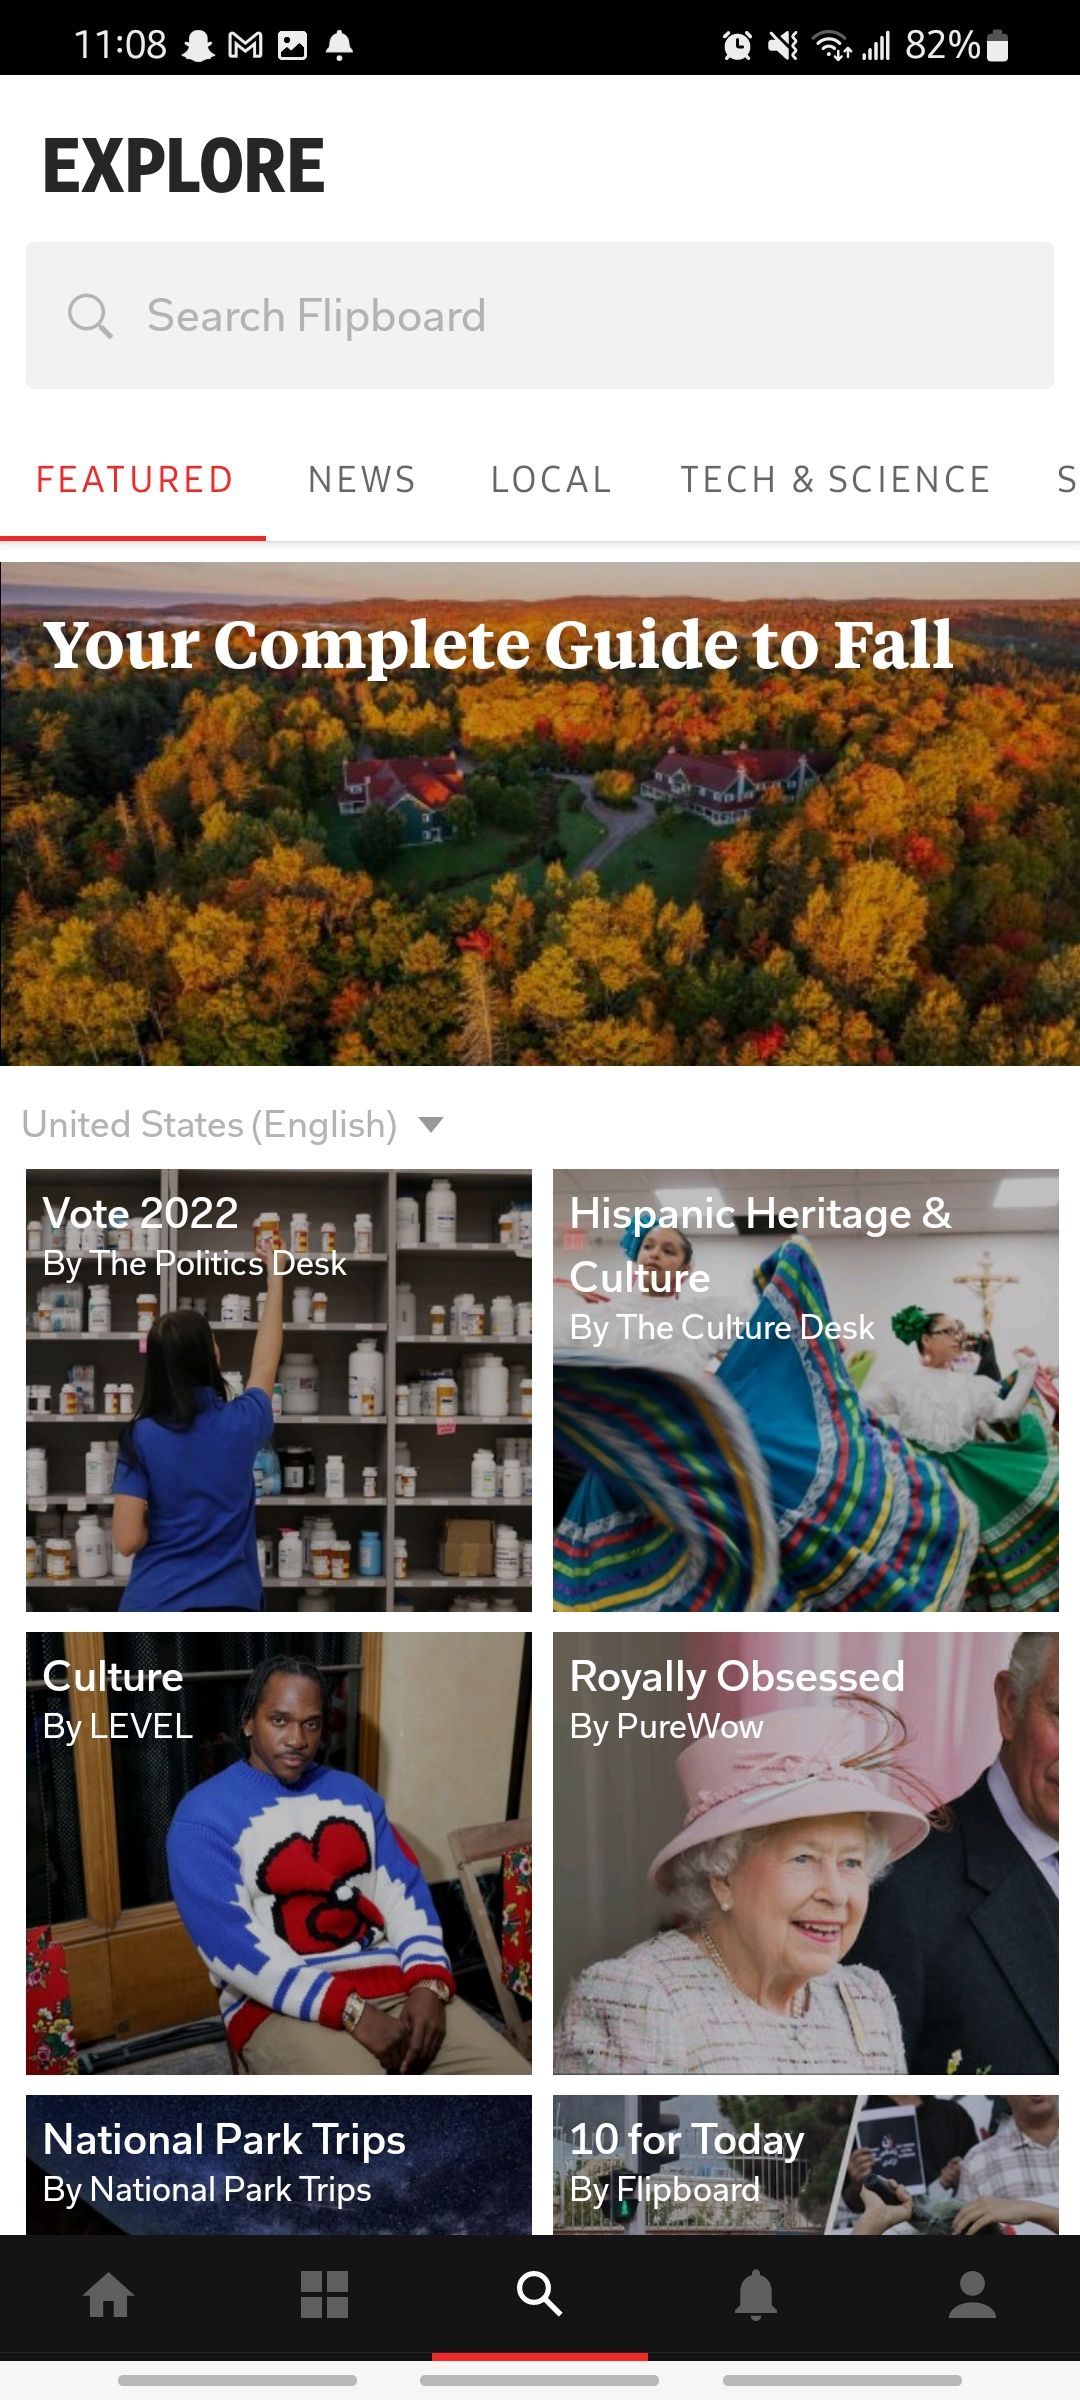 featured stories in explore tab in flipboard news app